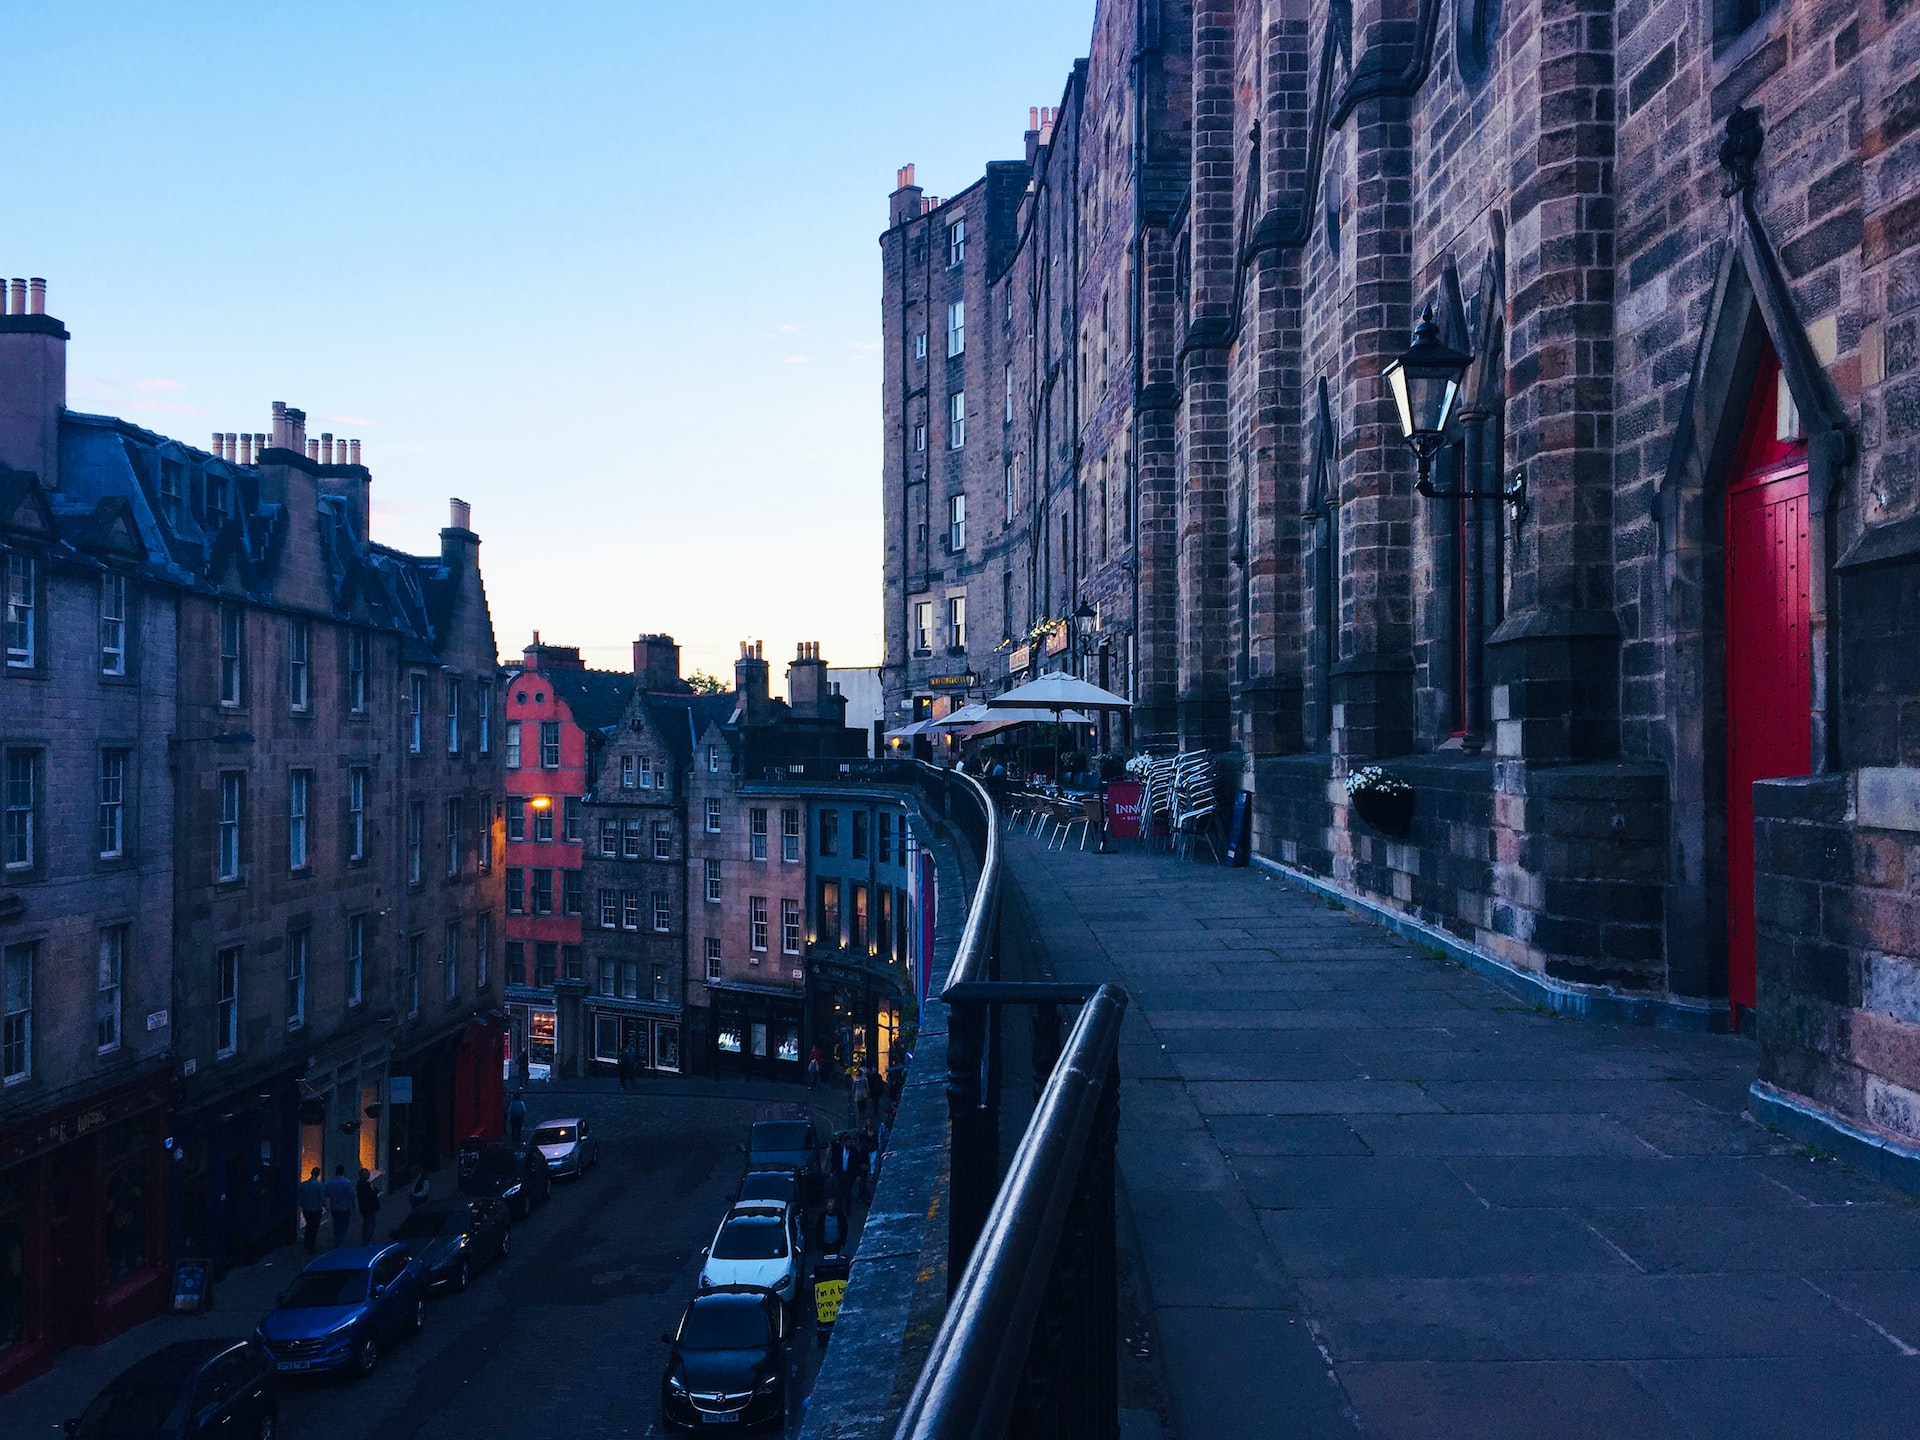 Night falling on cobblestone streets in Edinburgh.